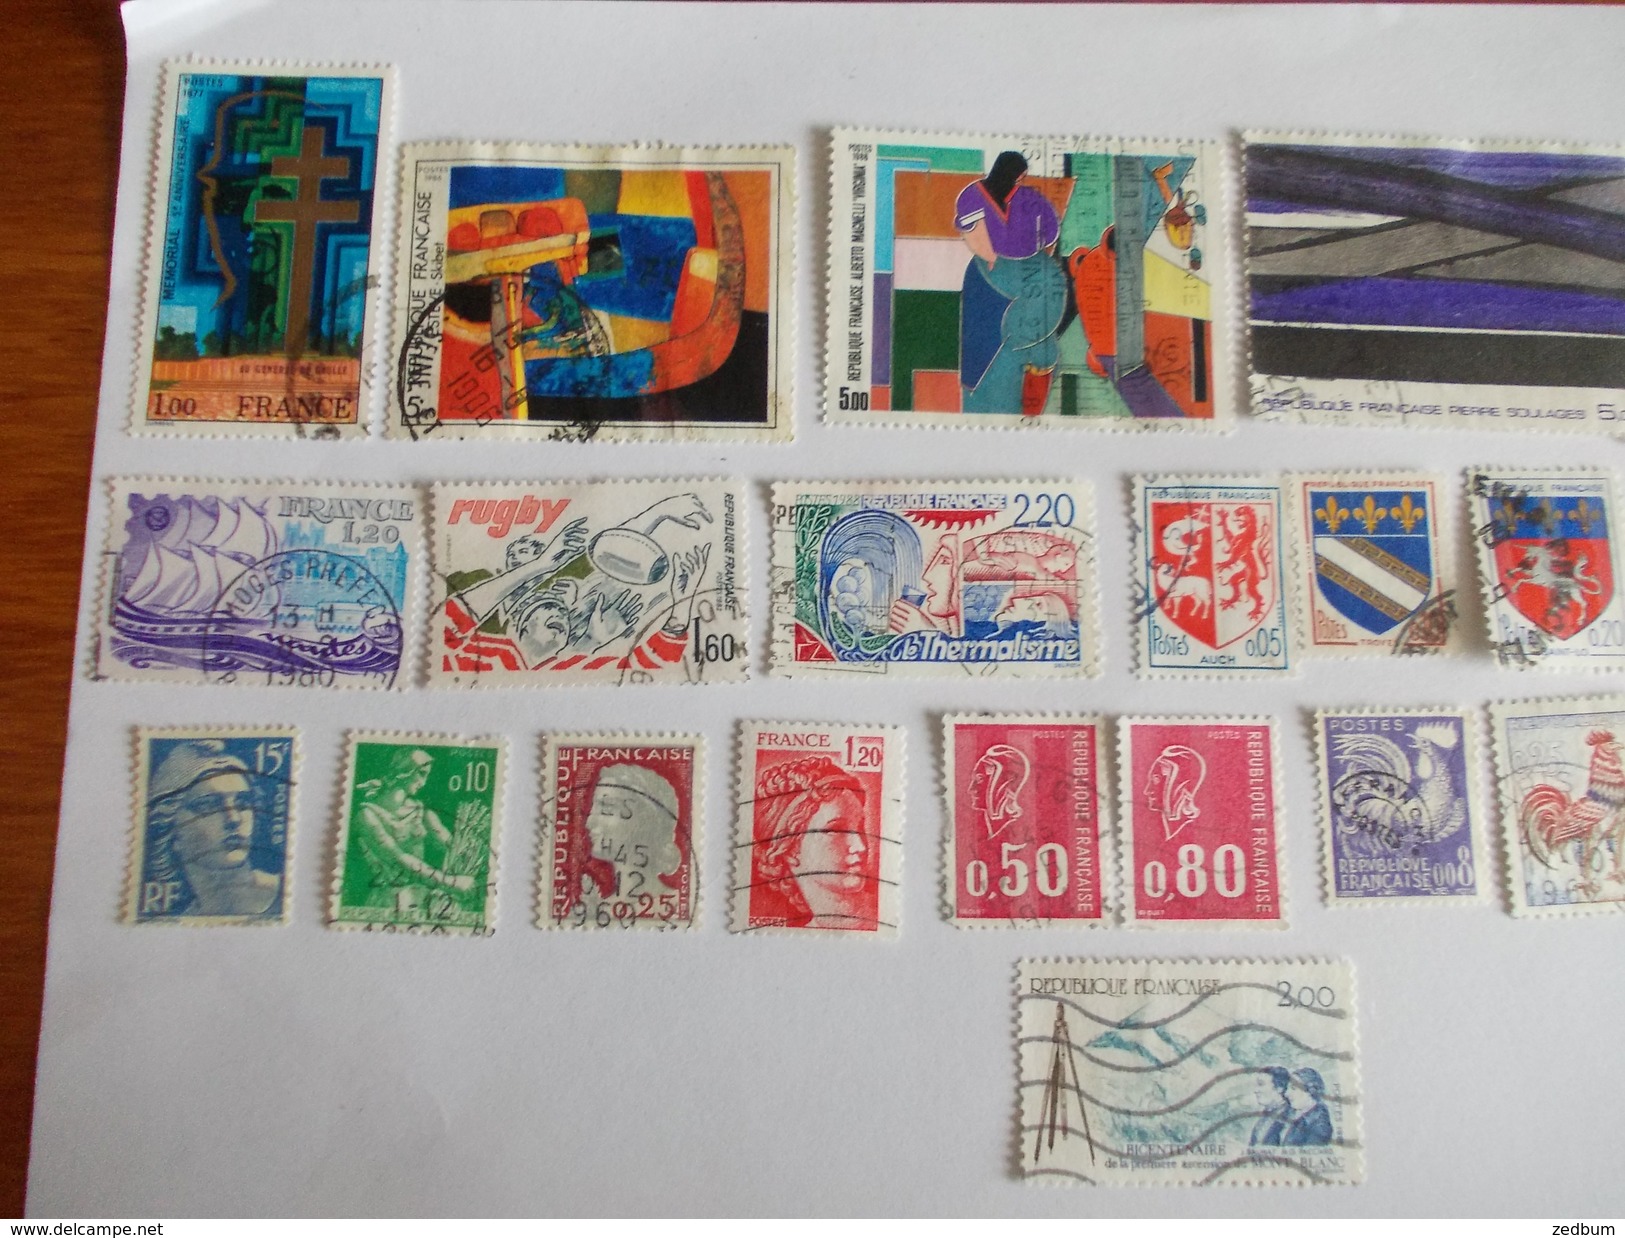 TIMBRE France Lot De 30 Timbres à Identifier N° 625 - Lots & Kiloware (mixtures) - Max. 999 Stamps